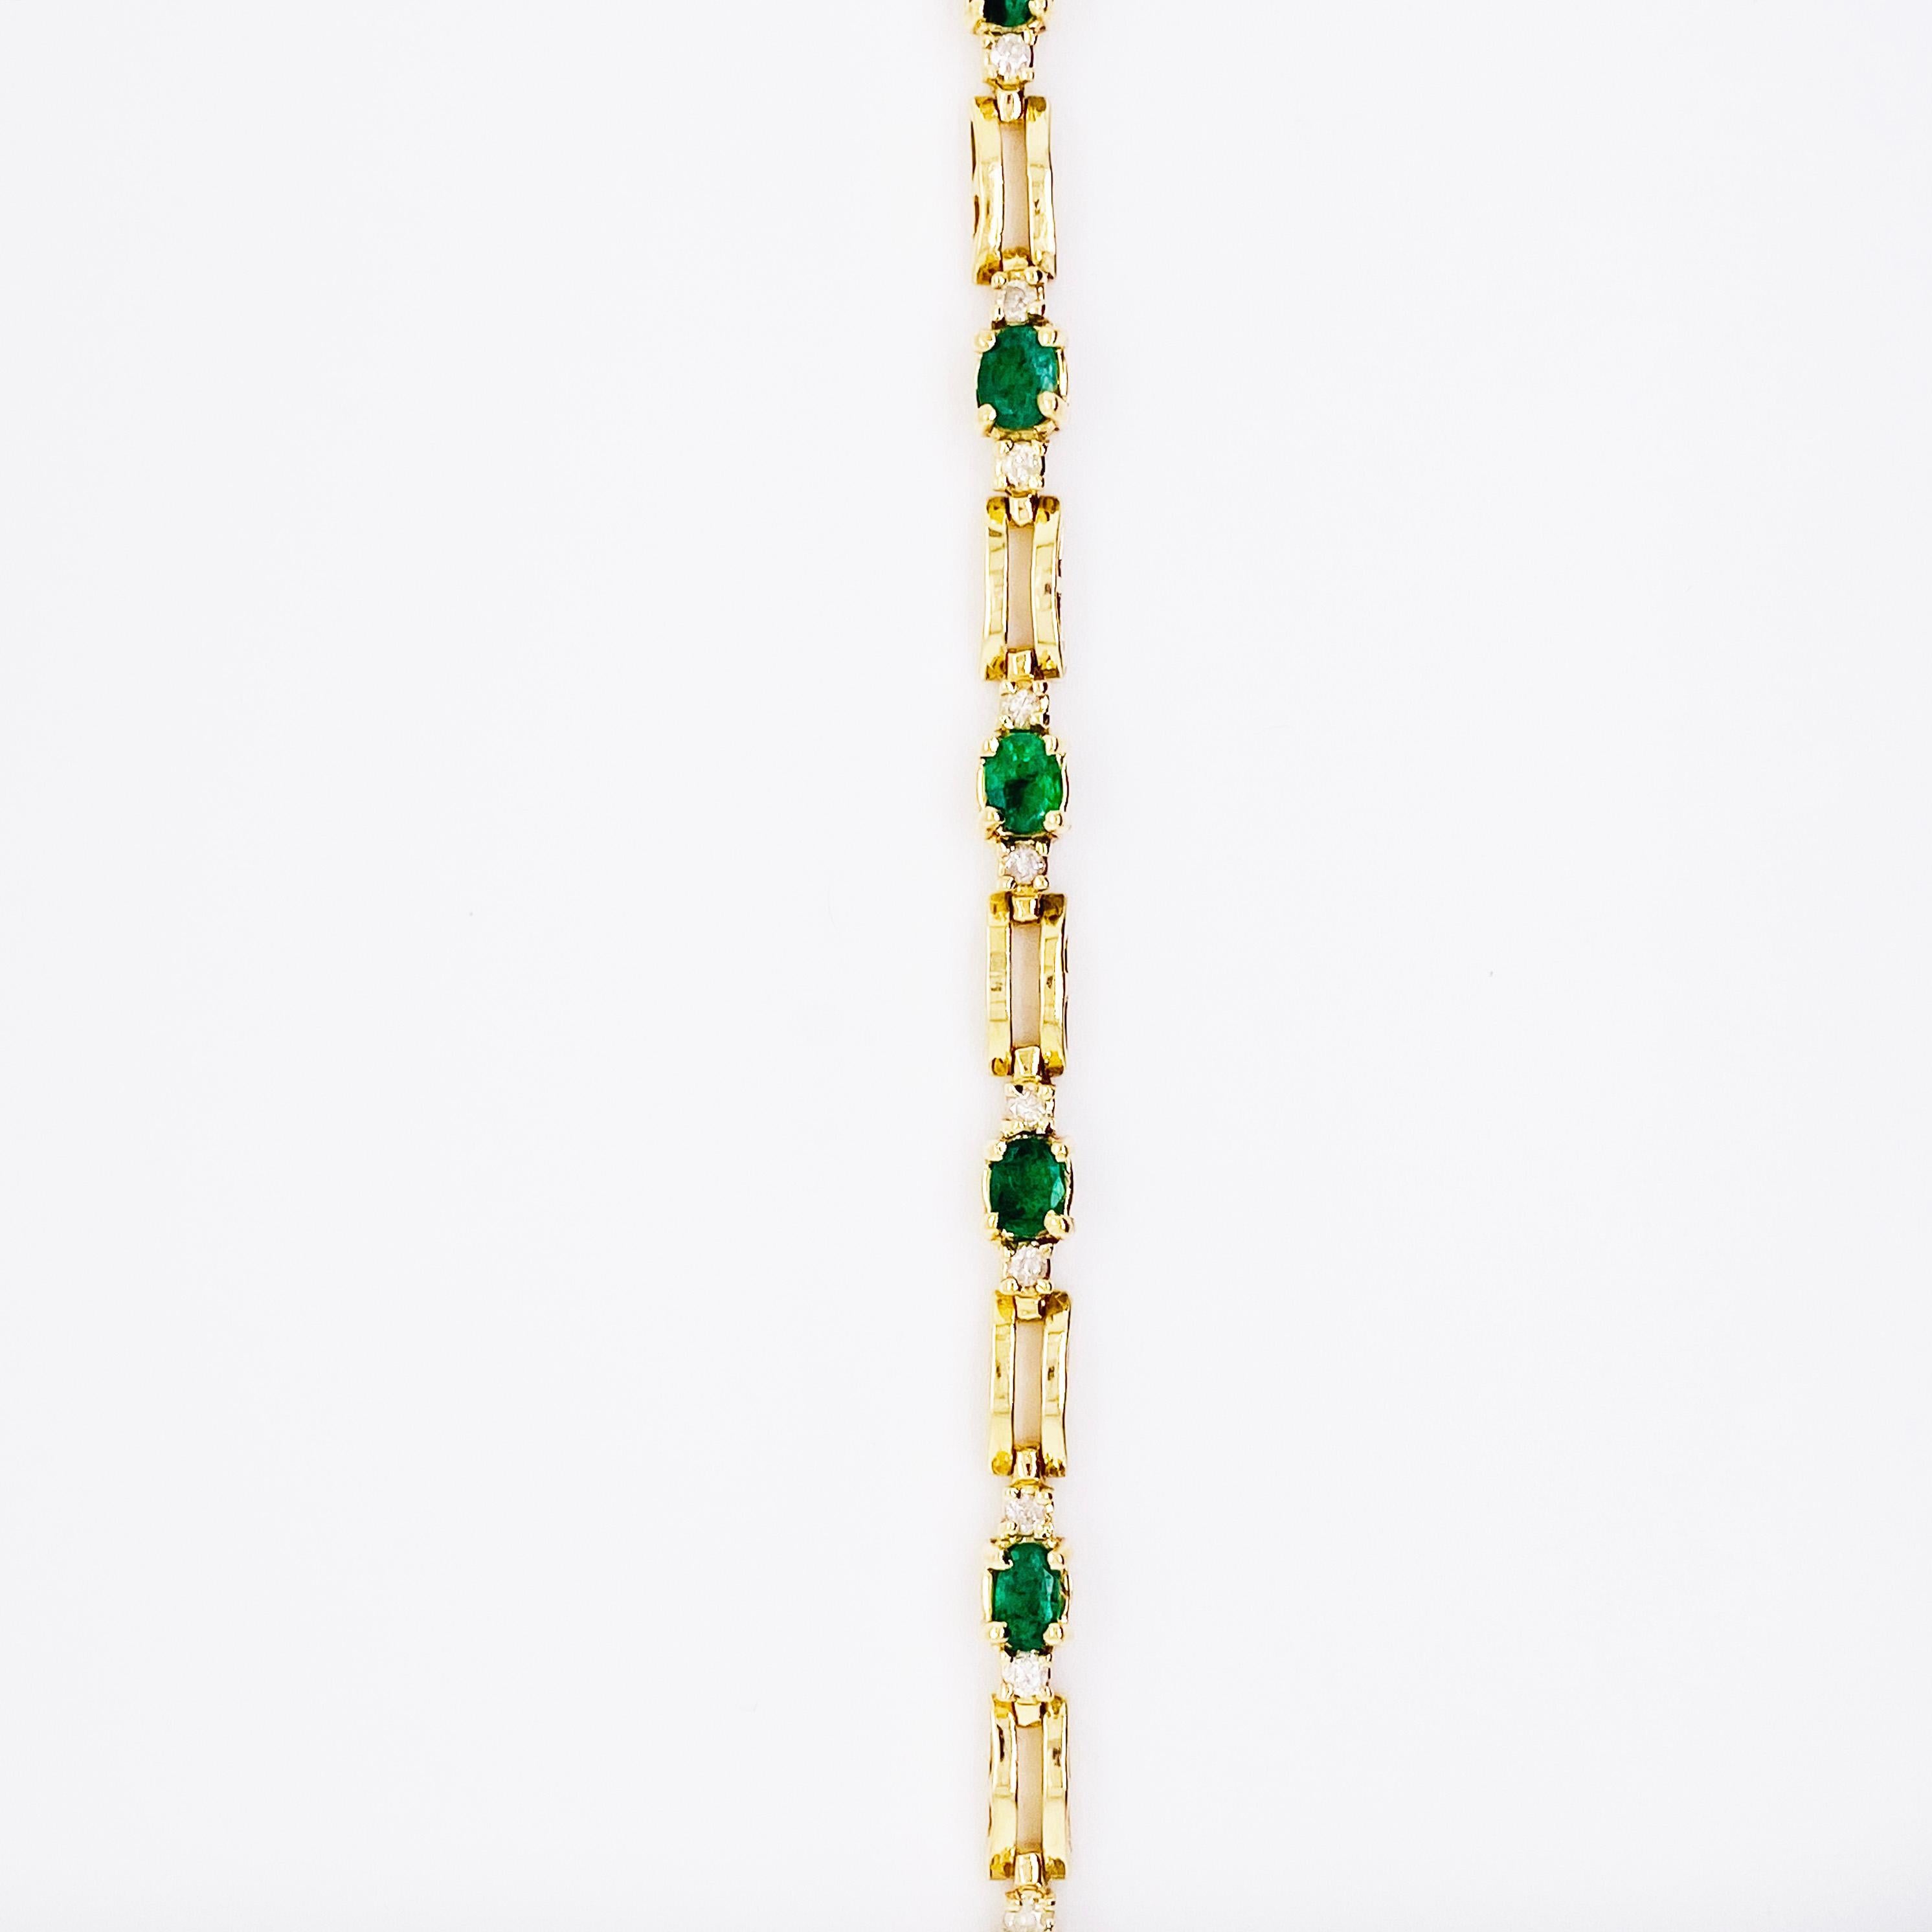 Oval Cut 10 Emerald Bracelet with Diamonds 14 Karat Gold, 3.5 Carat Tennis Bracelet